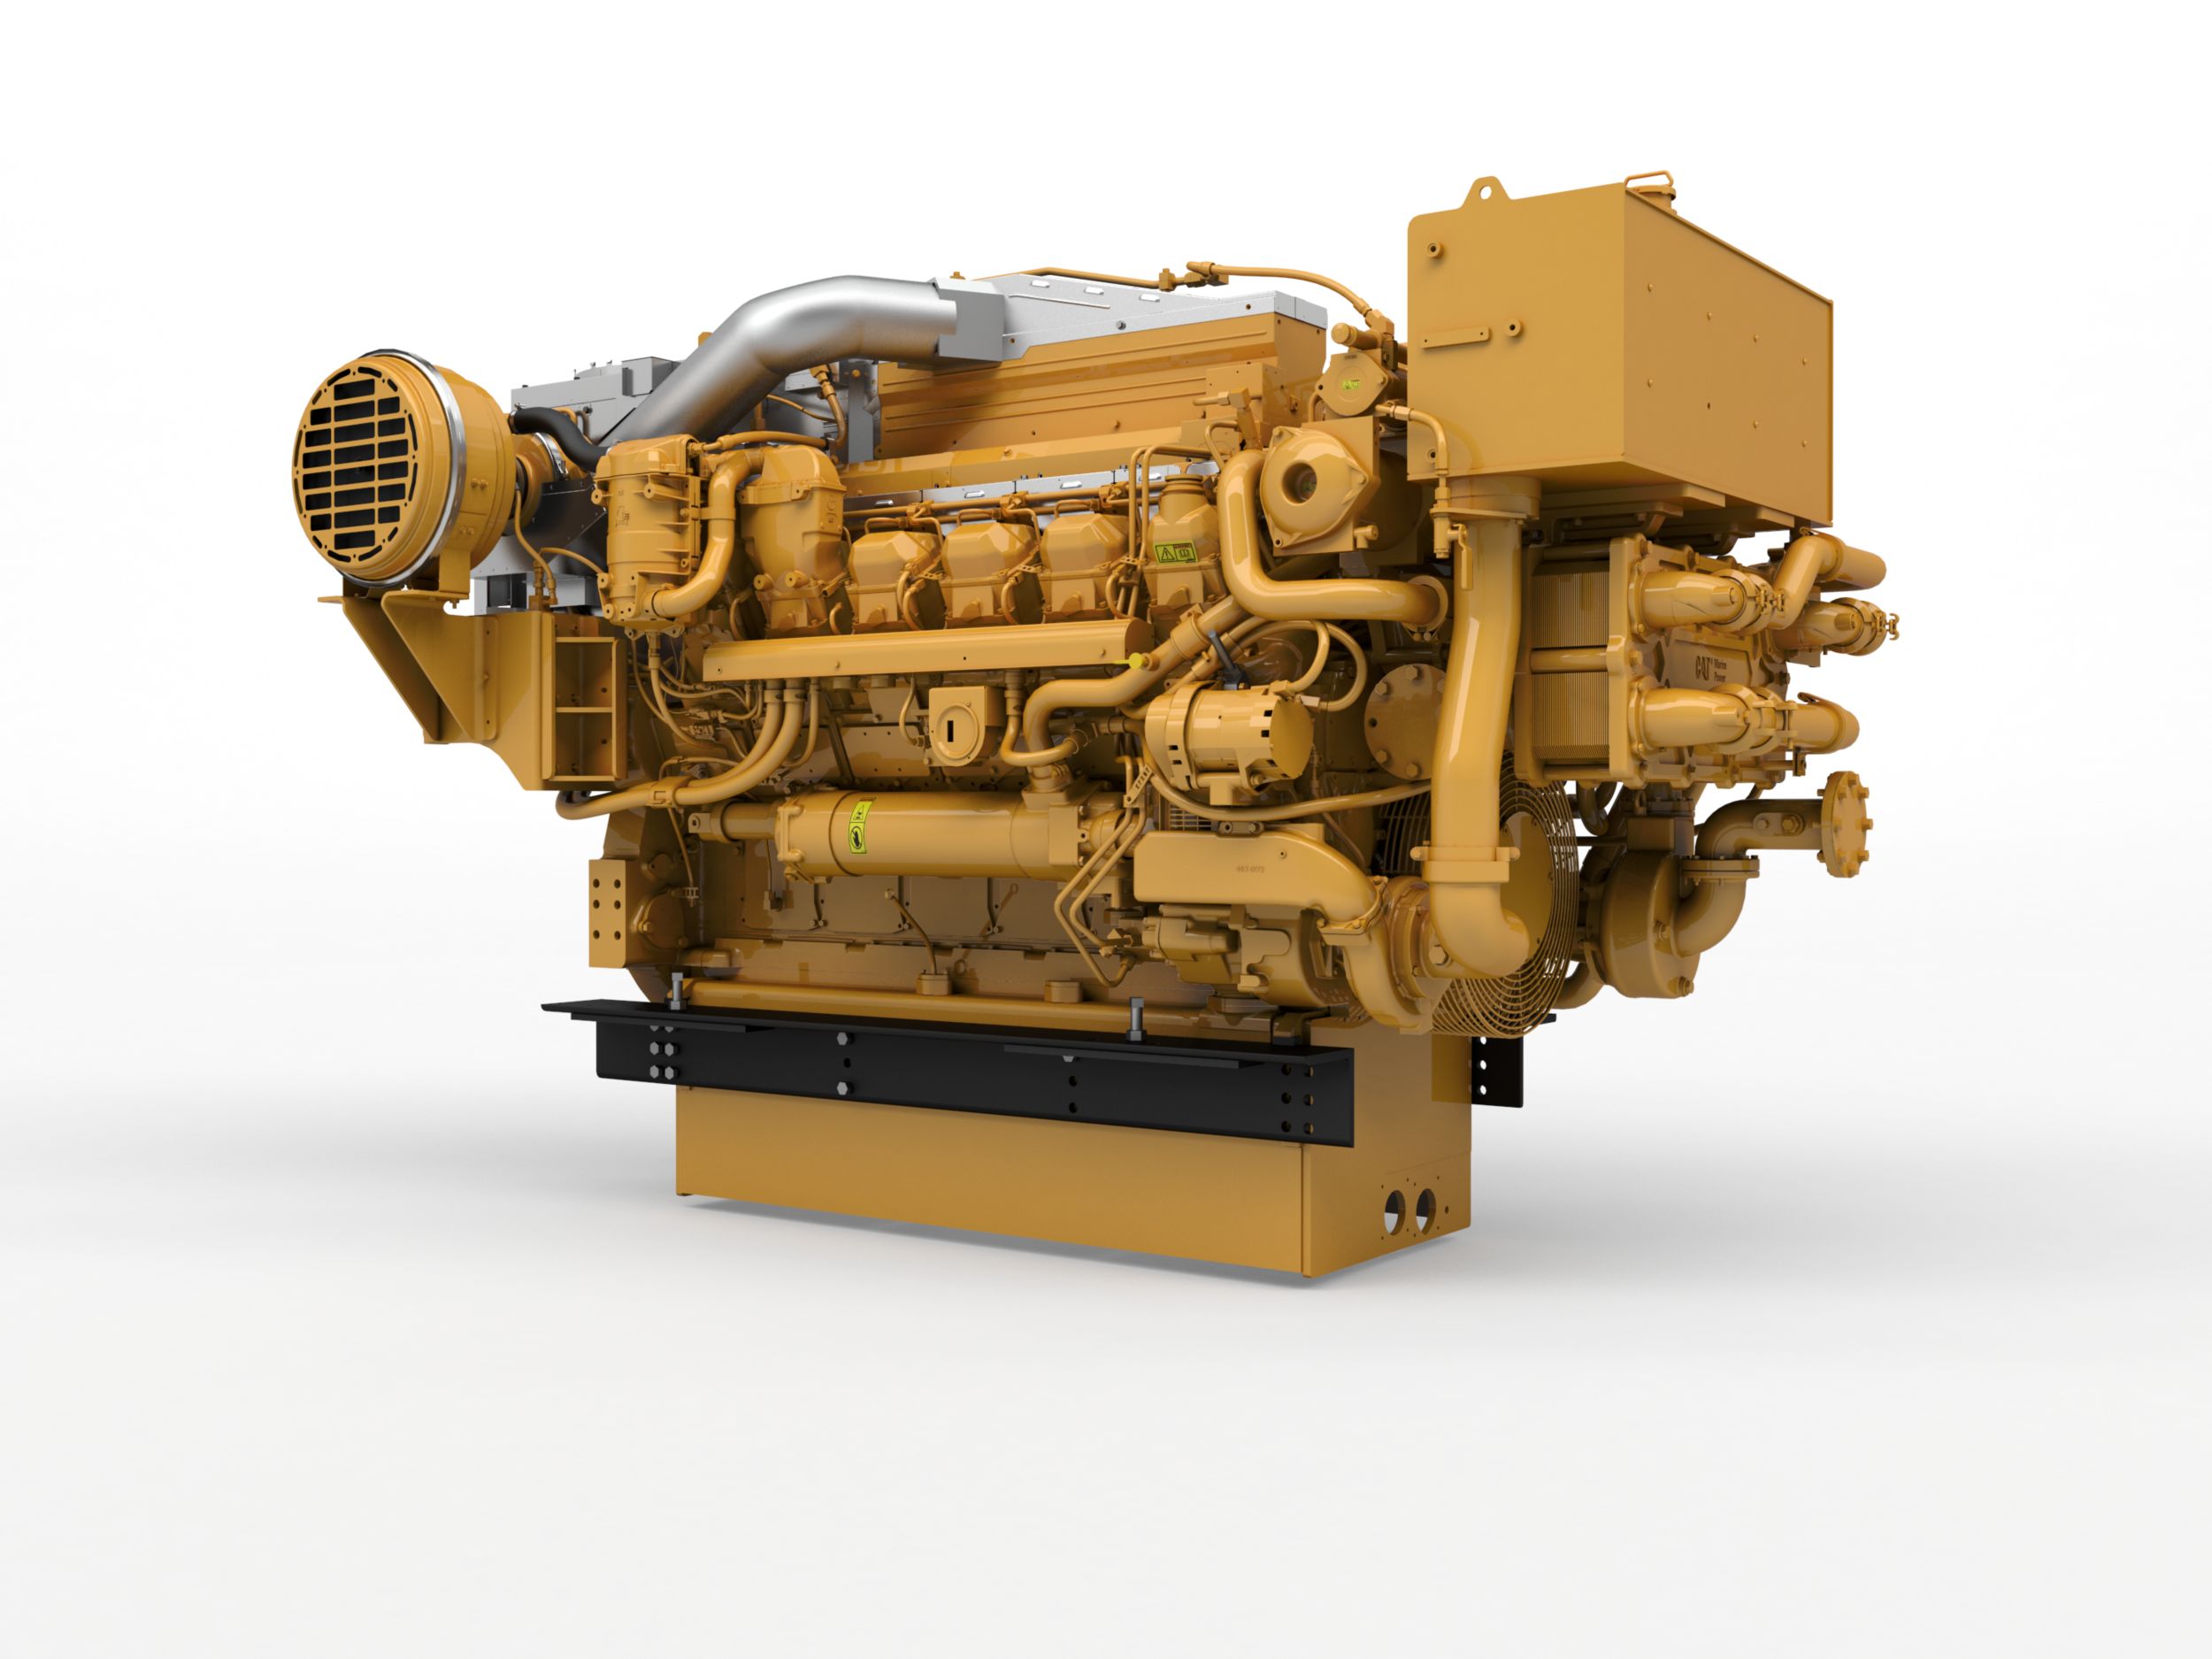 3512E Marine Propulsion Engine (U.S. EPA Tier 4 Final)